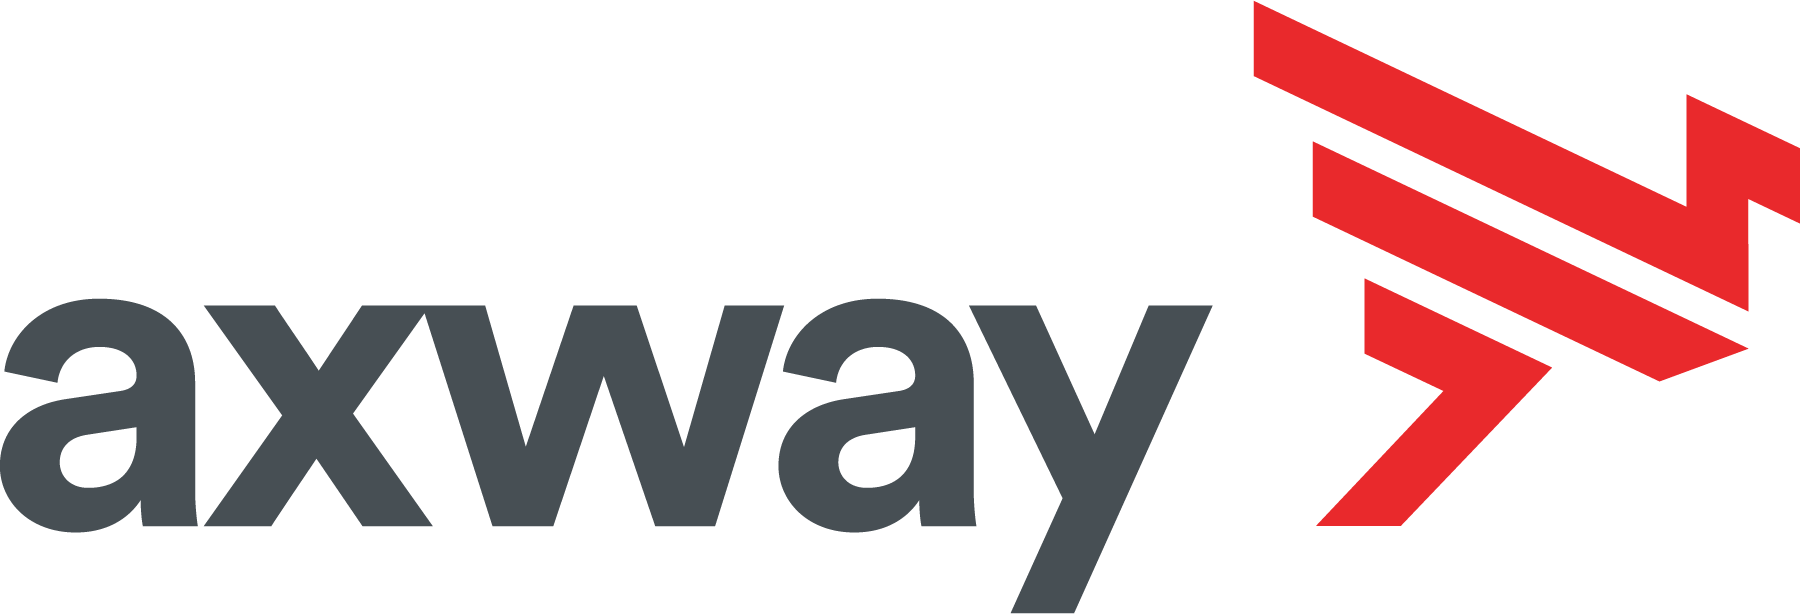 Axway_logo_horiz_gray_red_cmyk